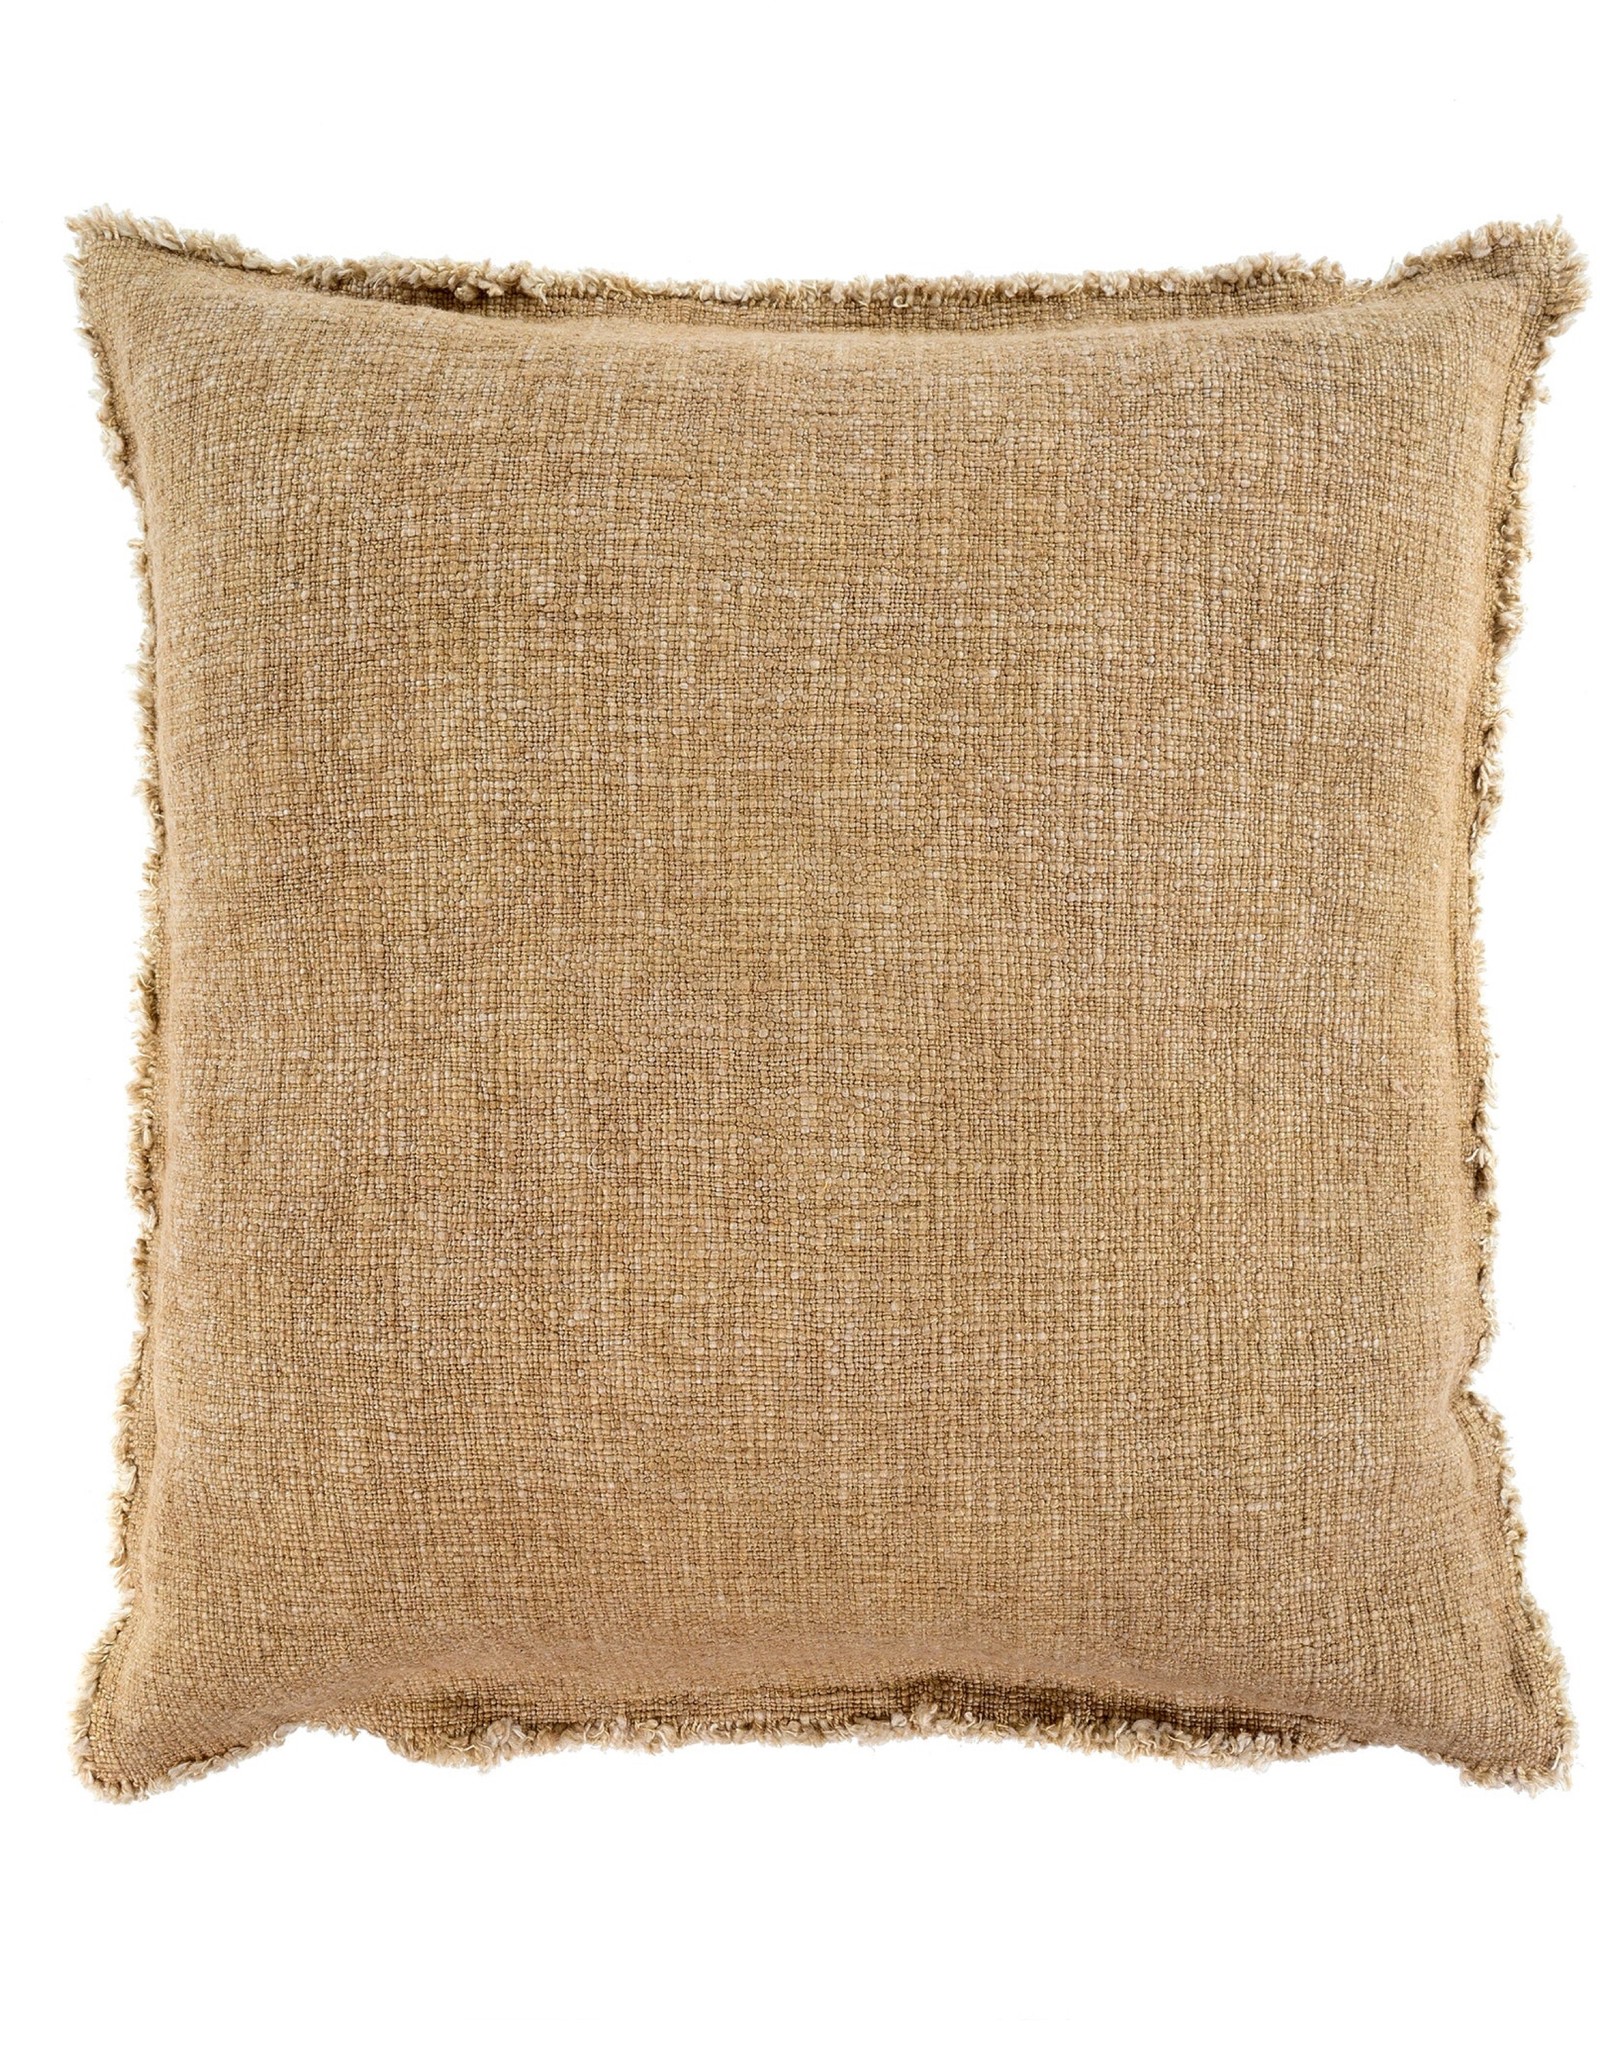 Indaba Cushions Indaba Selena Linen Sand 20 x 20 1-4477-C